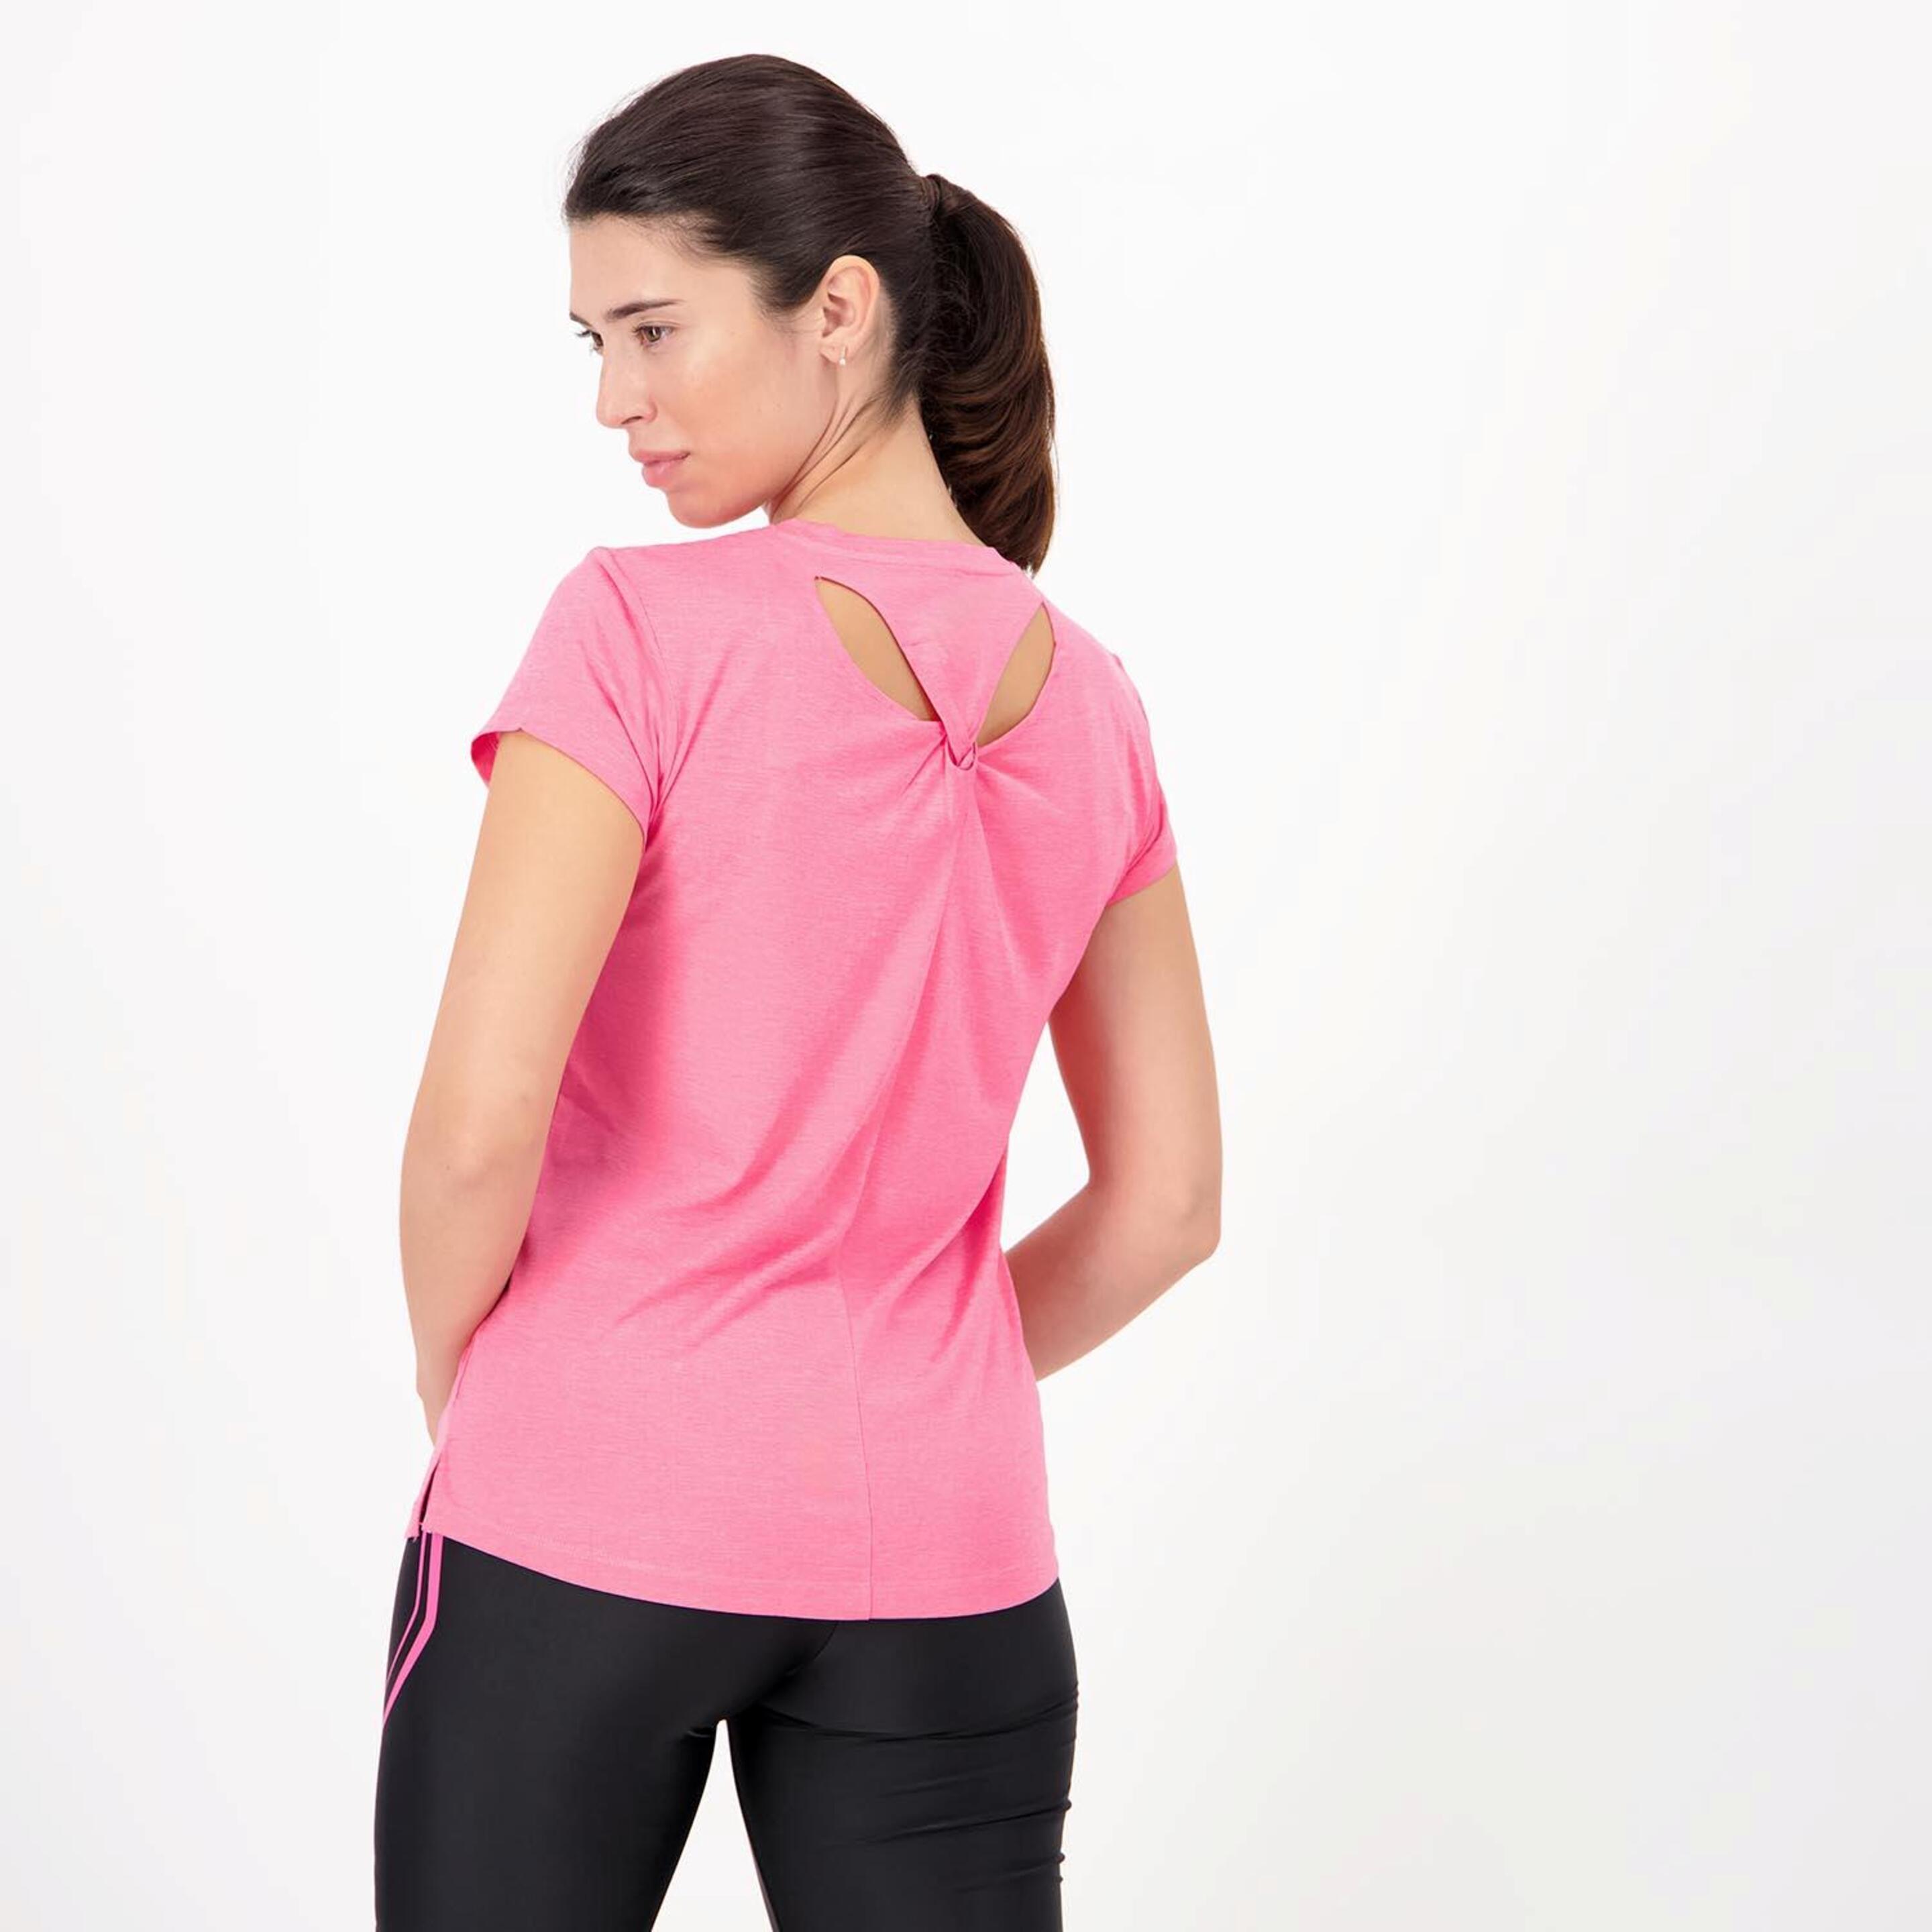 Ipso Combi - Fucsia - Camiseta Running Mujer